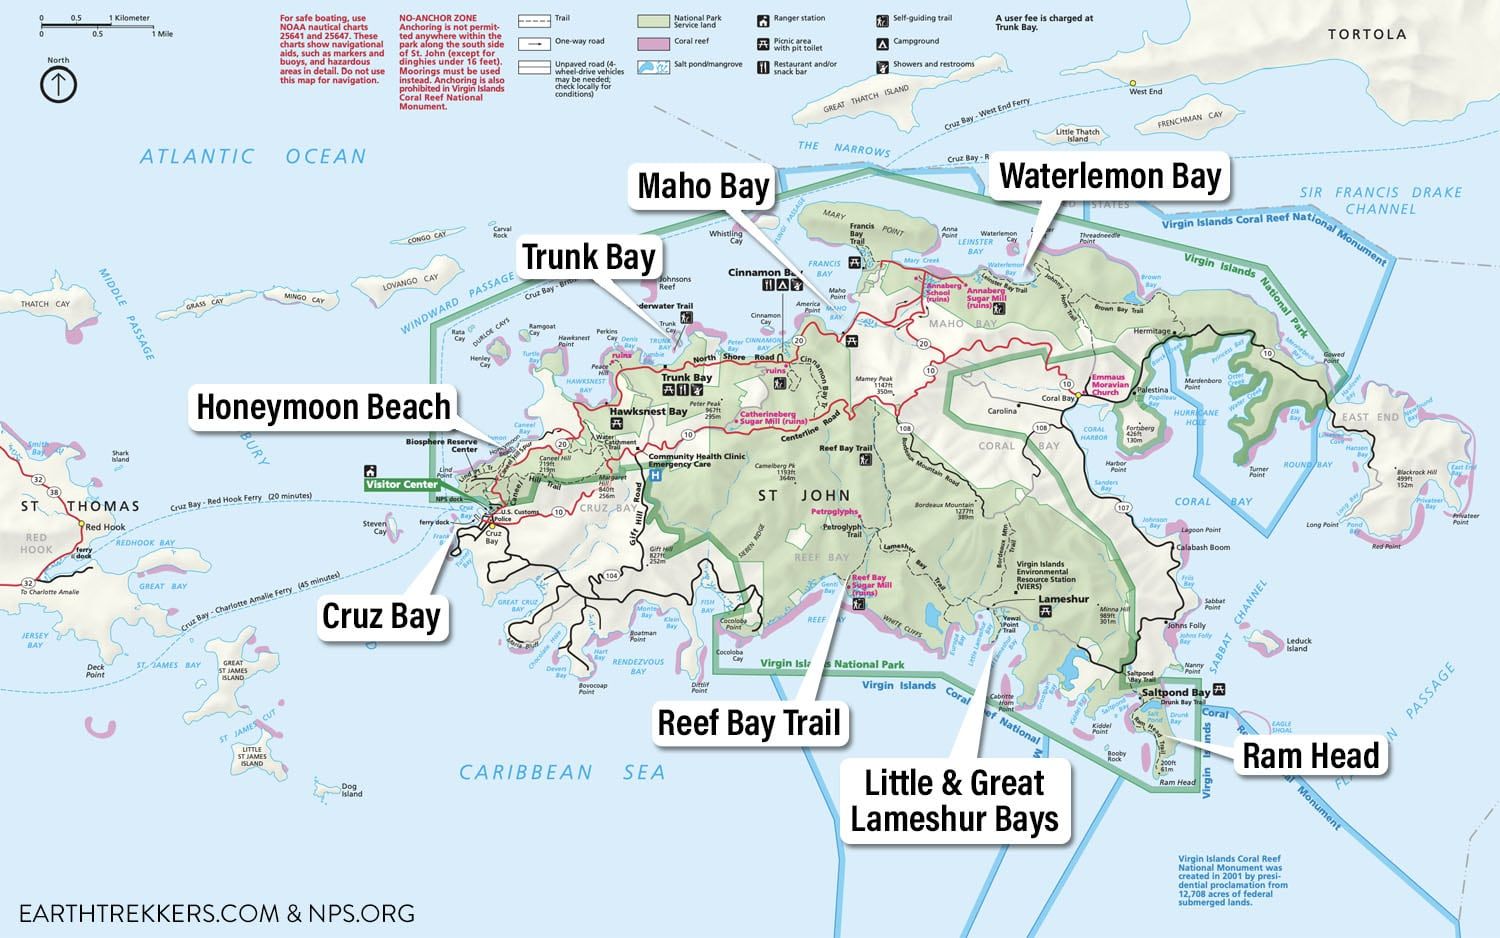 Virgin Islands NP Map